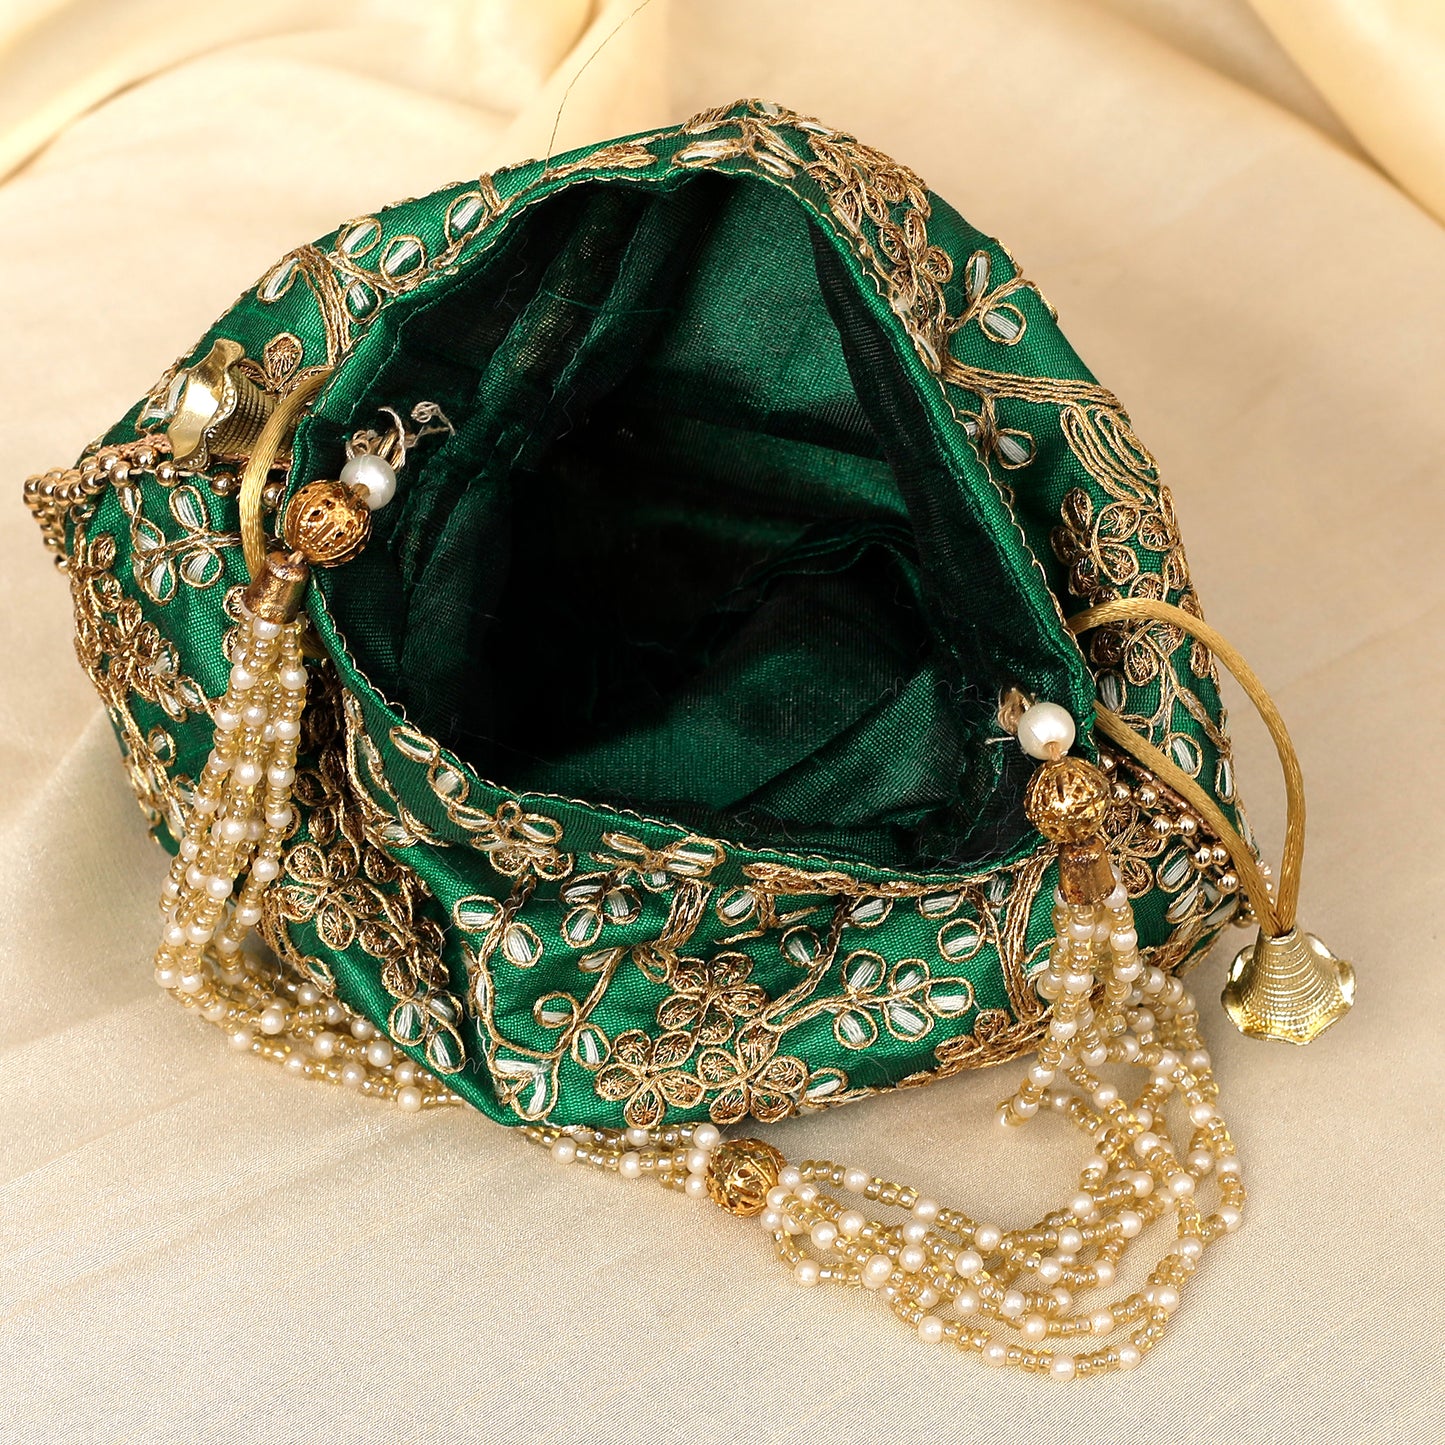 The Golden Amulet Green Potli